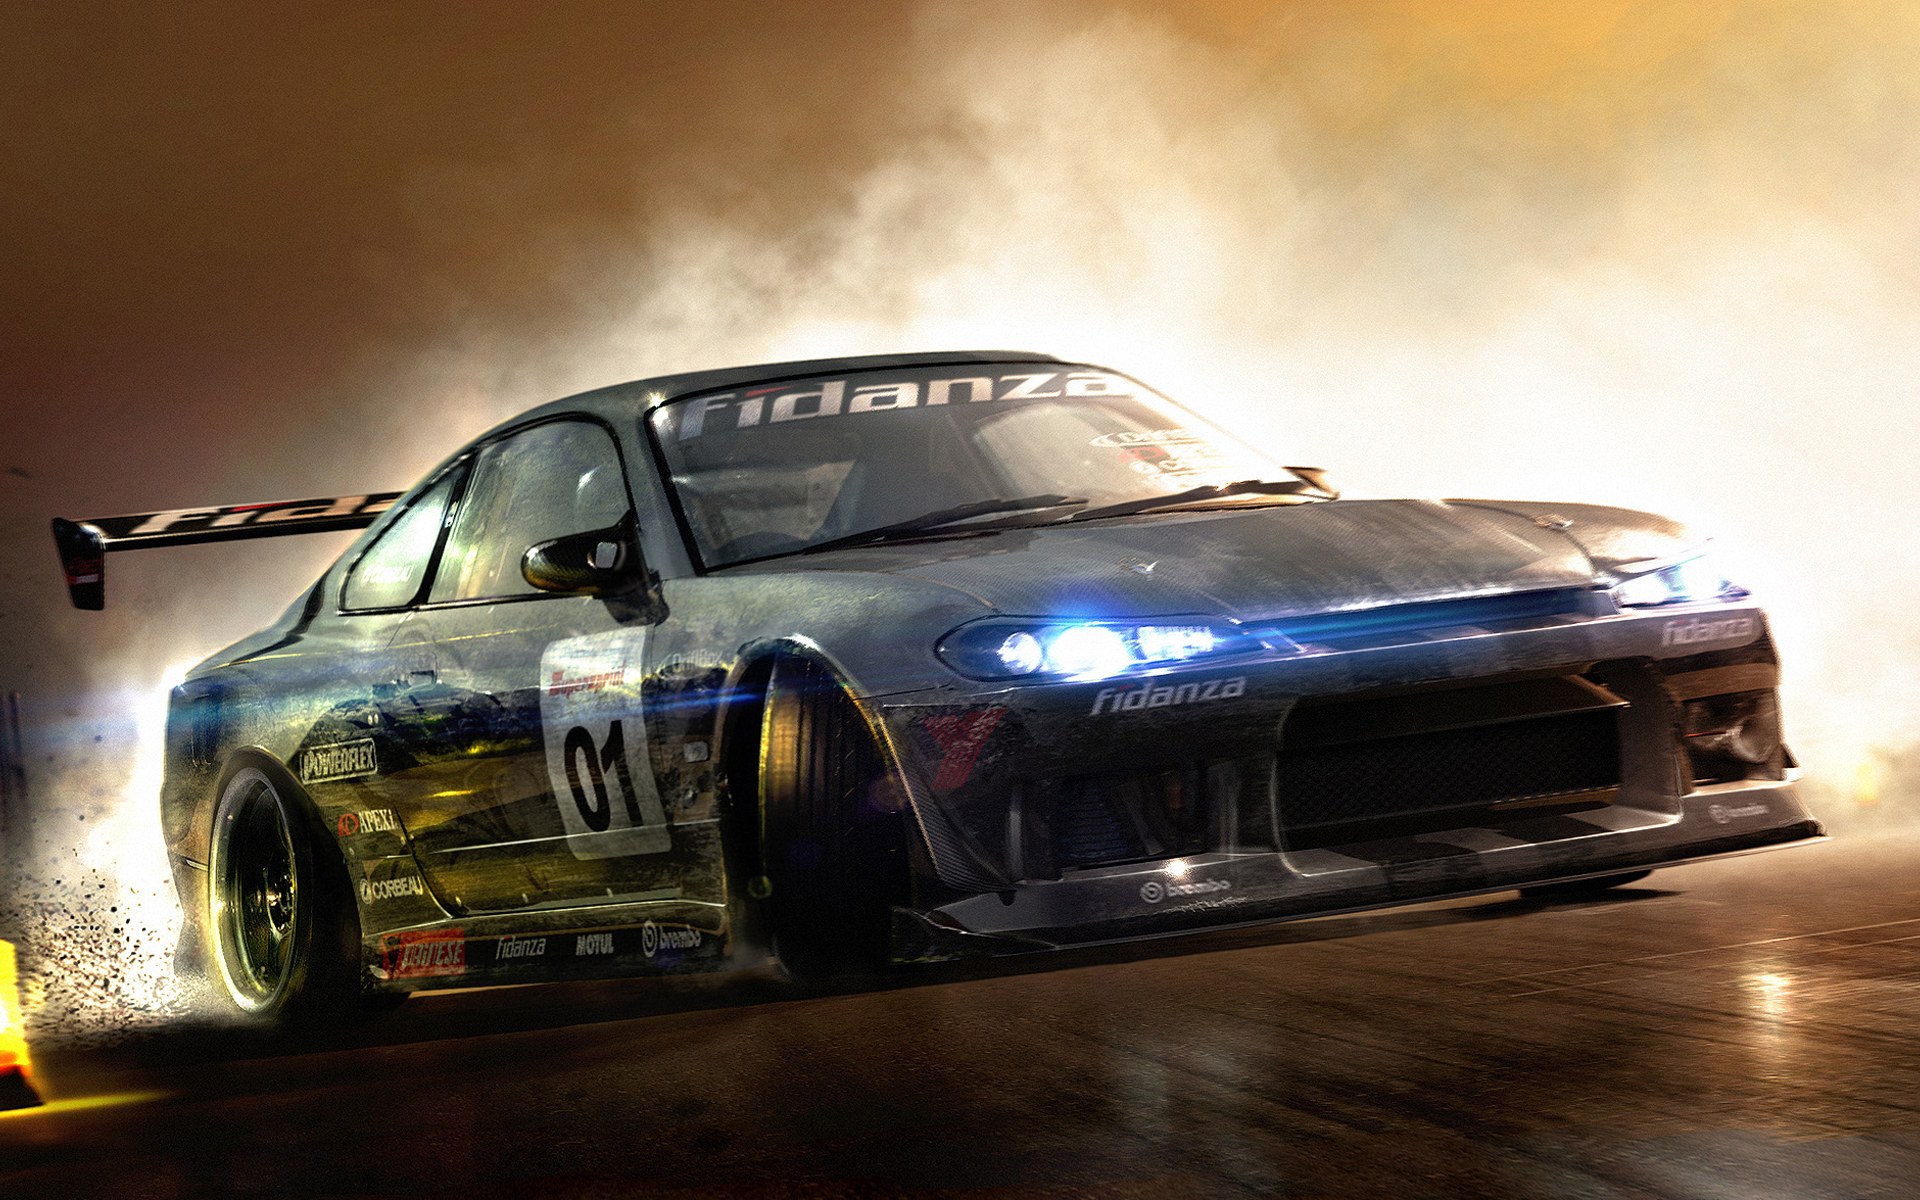 car racing background image